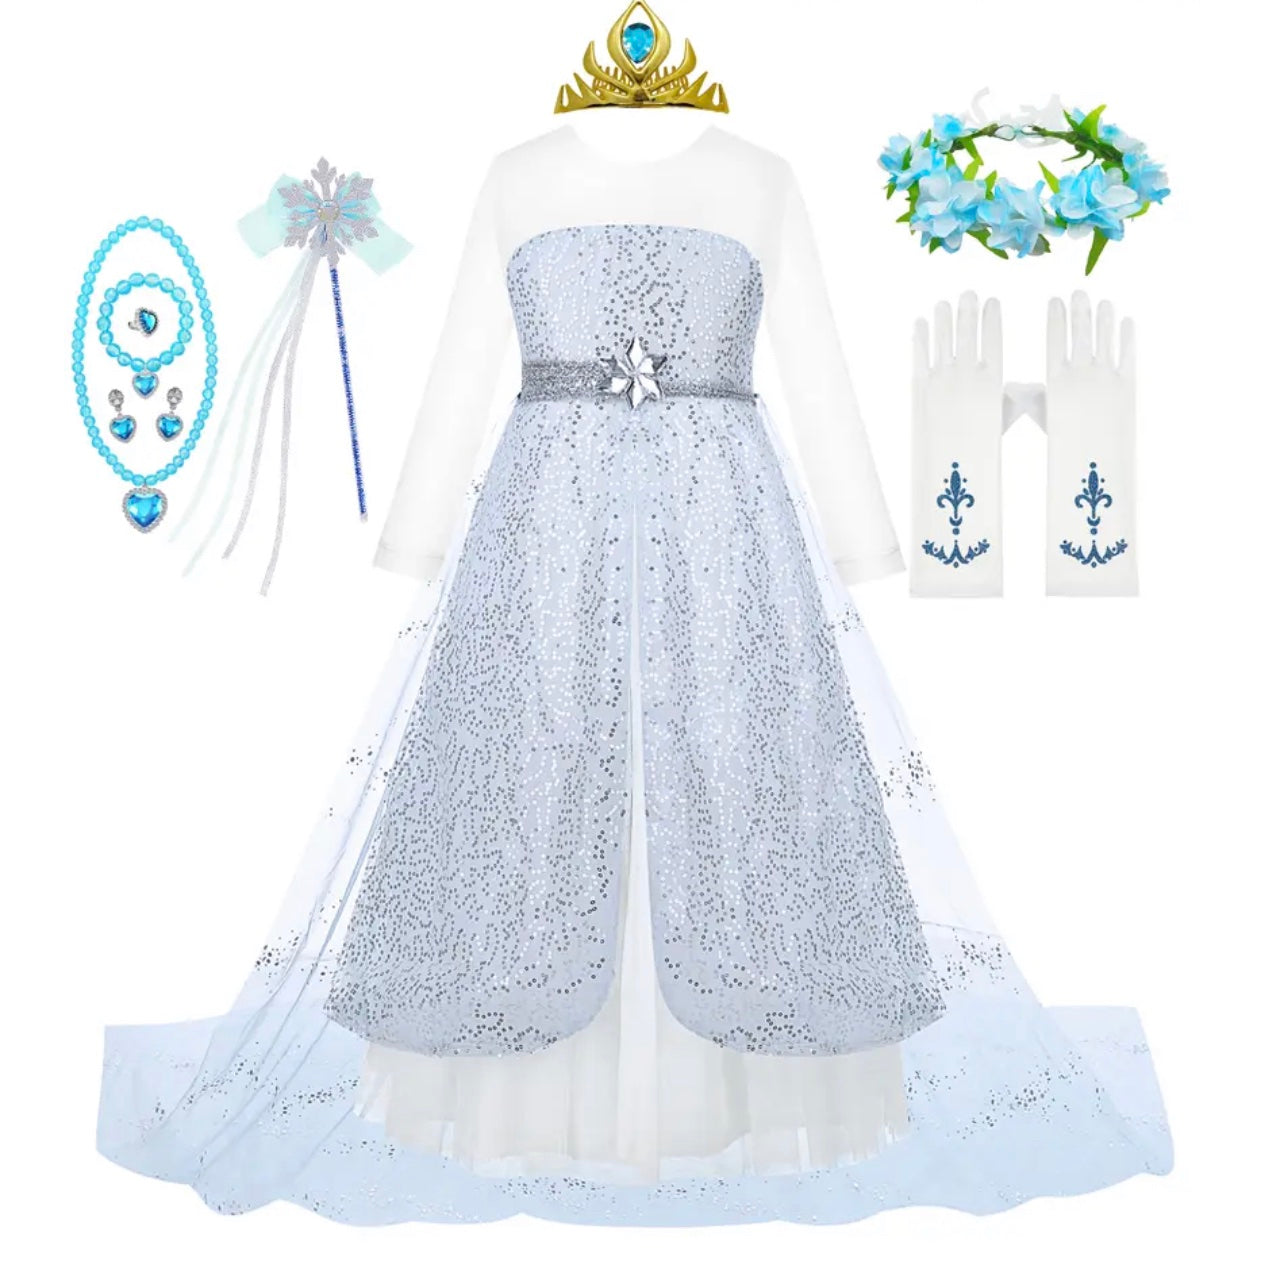 Snow Queen Frozen dress with accessories